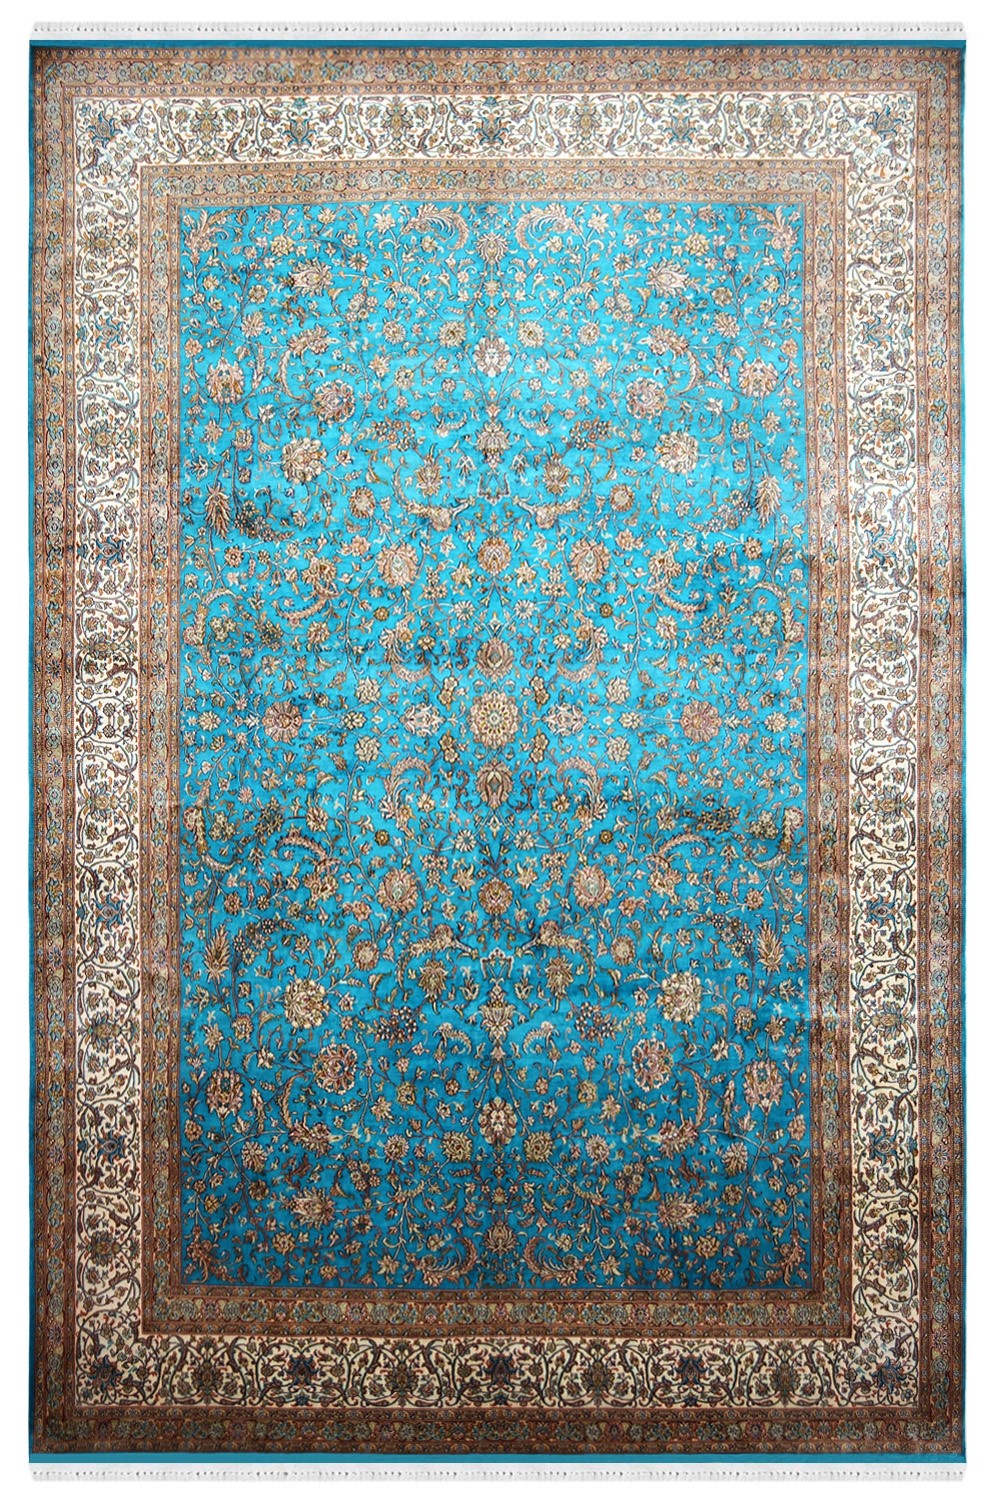 https://www.yakcarpet.in/wp-content/uploads/2018/11/Turq-Jewel-Handknotted-Silk-Area-Rug.jpg